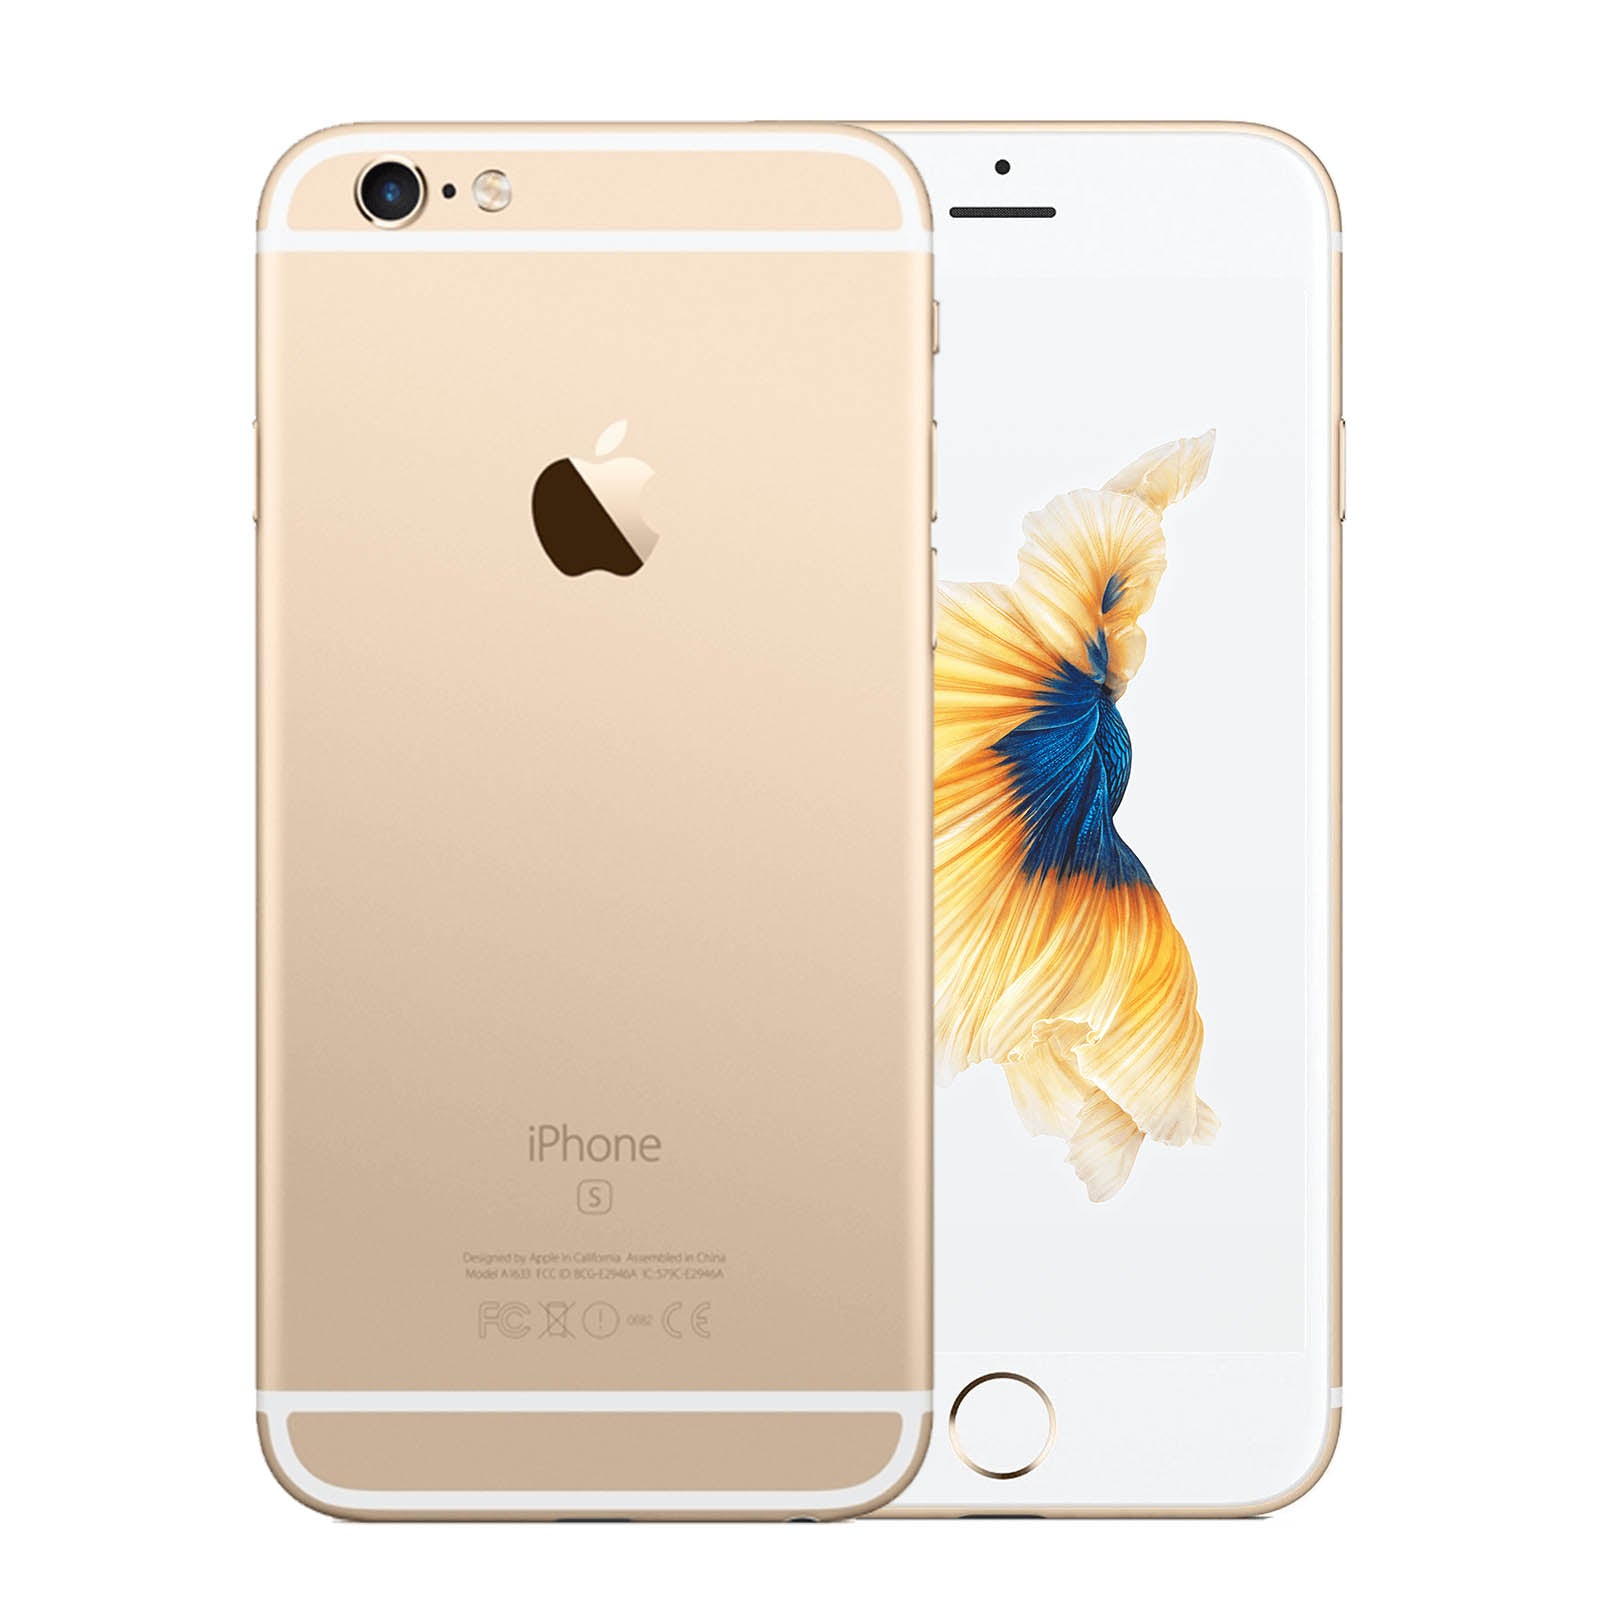 Apple iPhone 6S Plus 32GB Gold Good - Unlocked